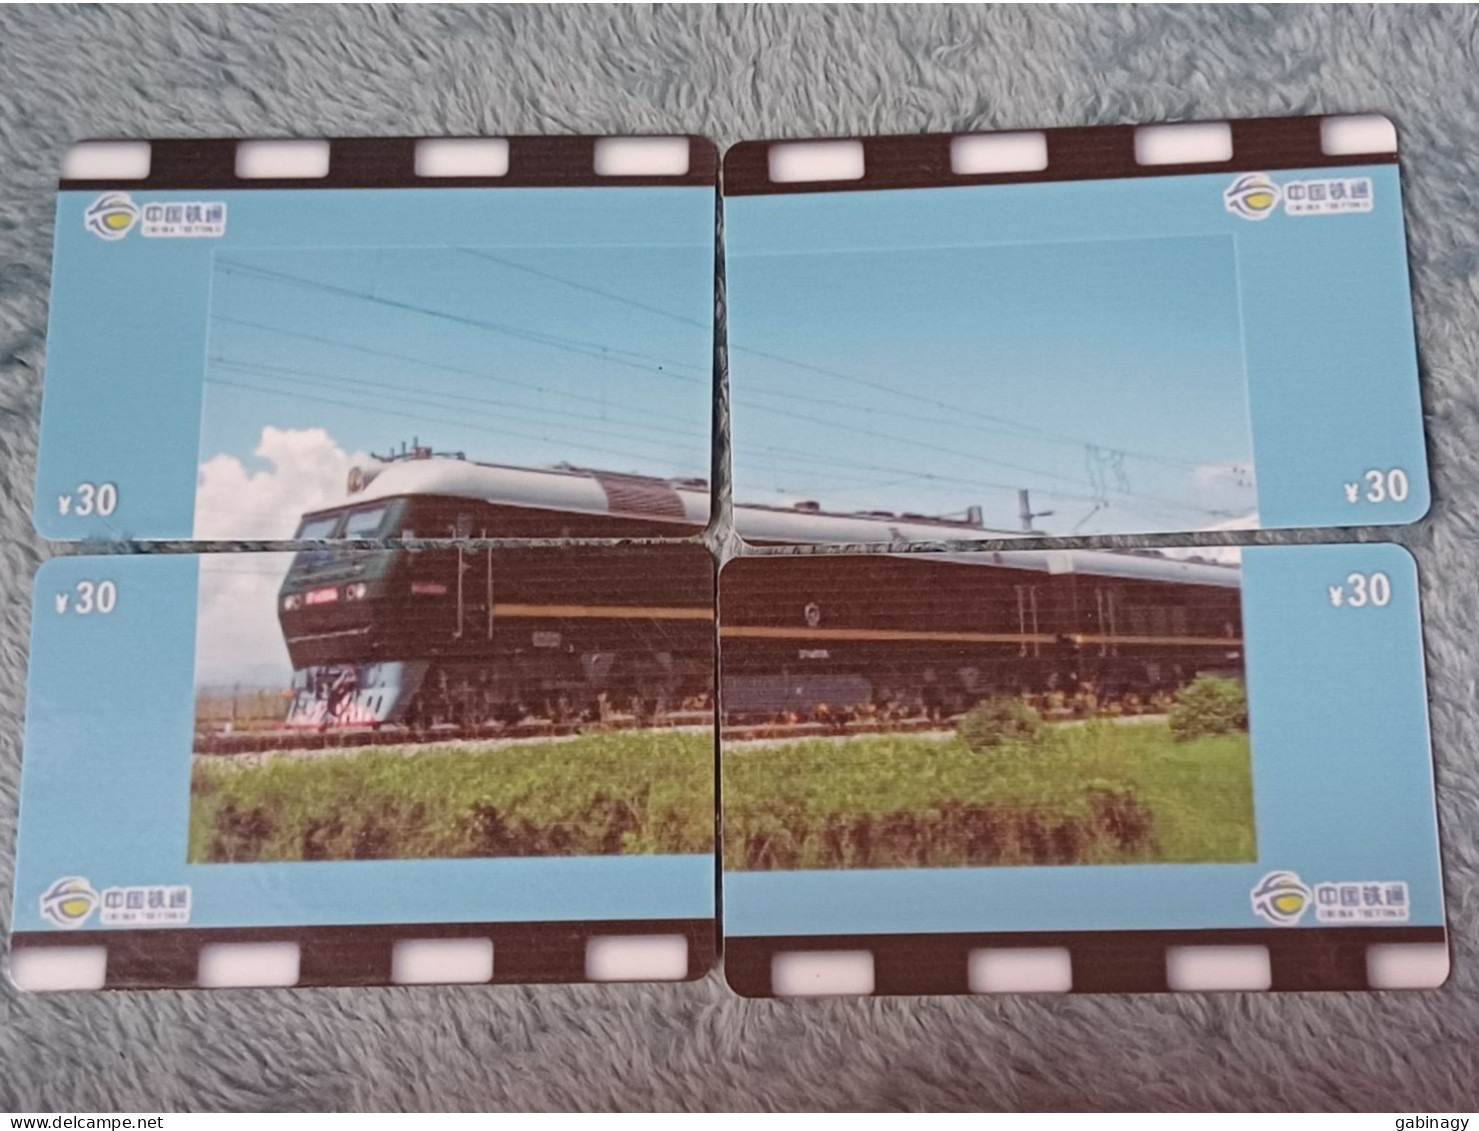 CHINA - TRAIN-055 - PUZZLE SET OF 4 CARDS - China